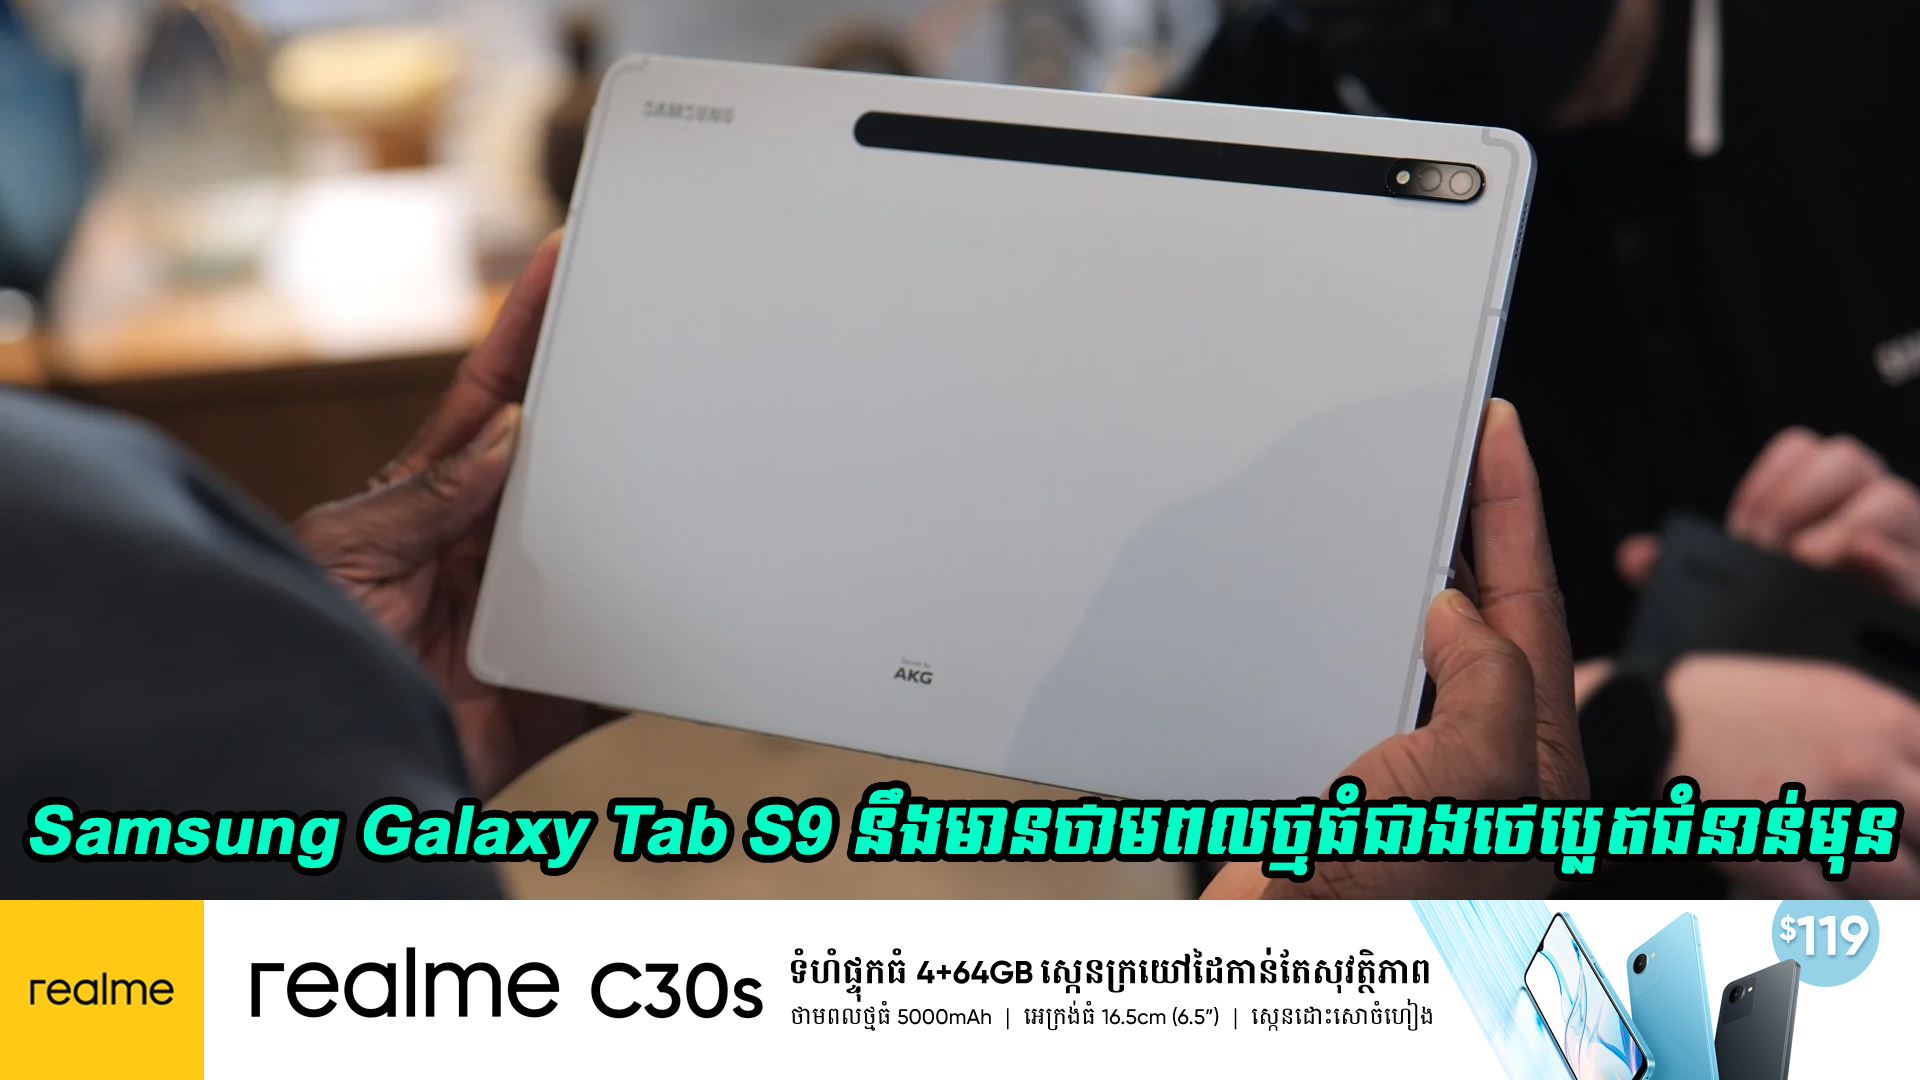 Samsung Galaxy Tab S9 នឹងមានថាមពលថ្មធំជាងថេប្លេតជំនាន់មុន